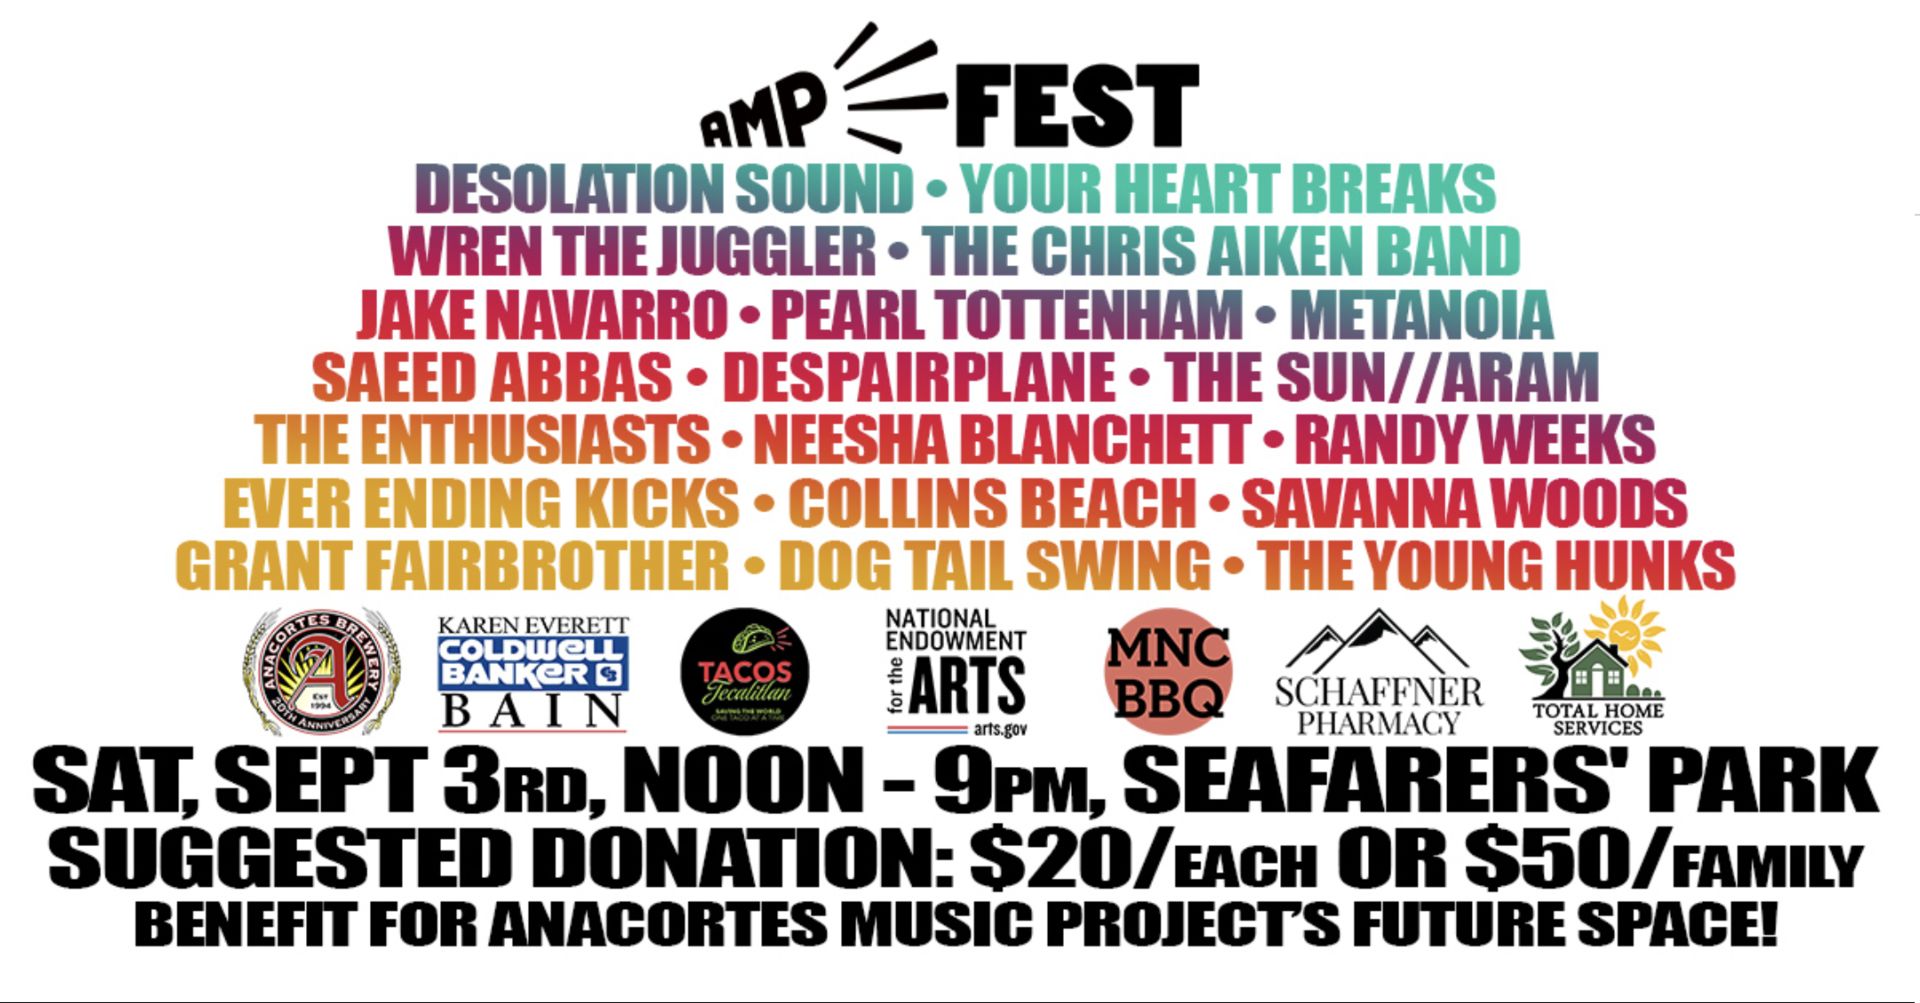 AMPfest Music Festival - September 3rd, Anacortes, Washington, United States